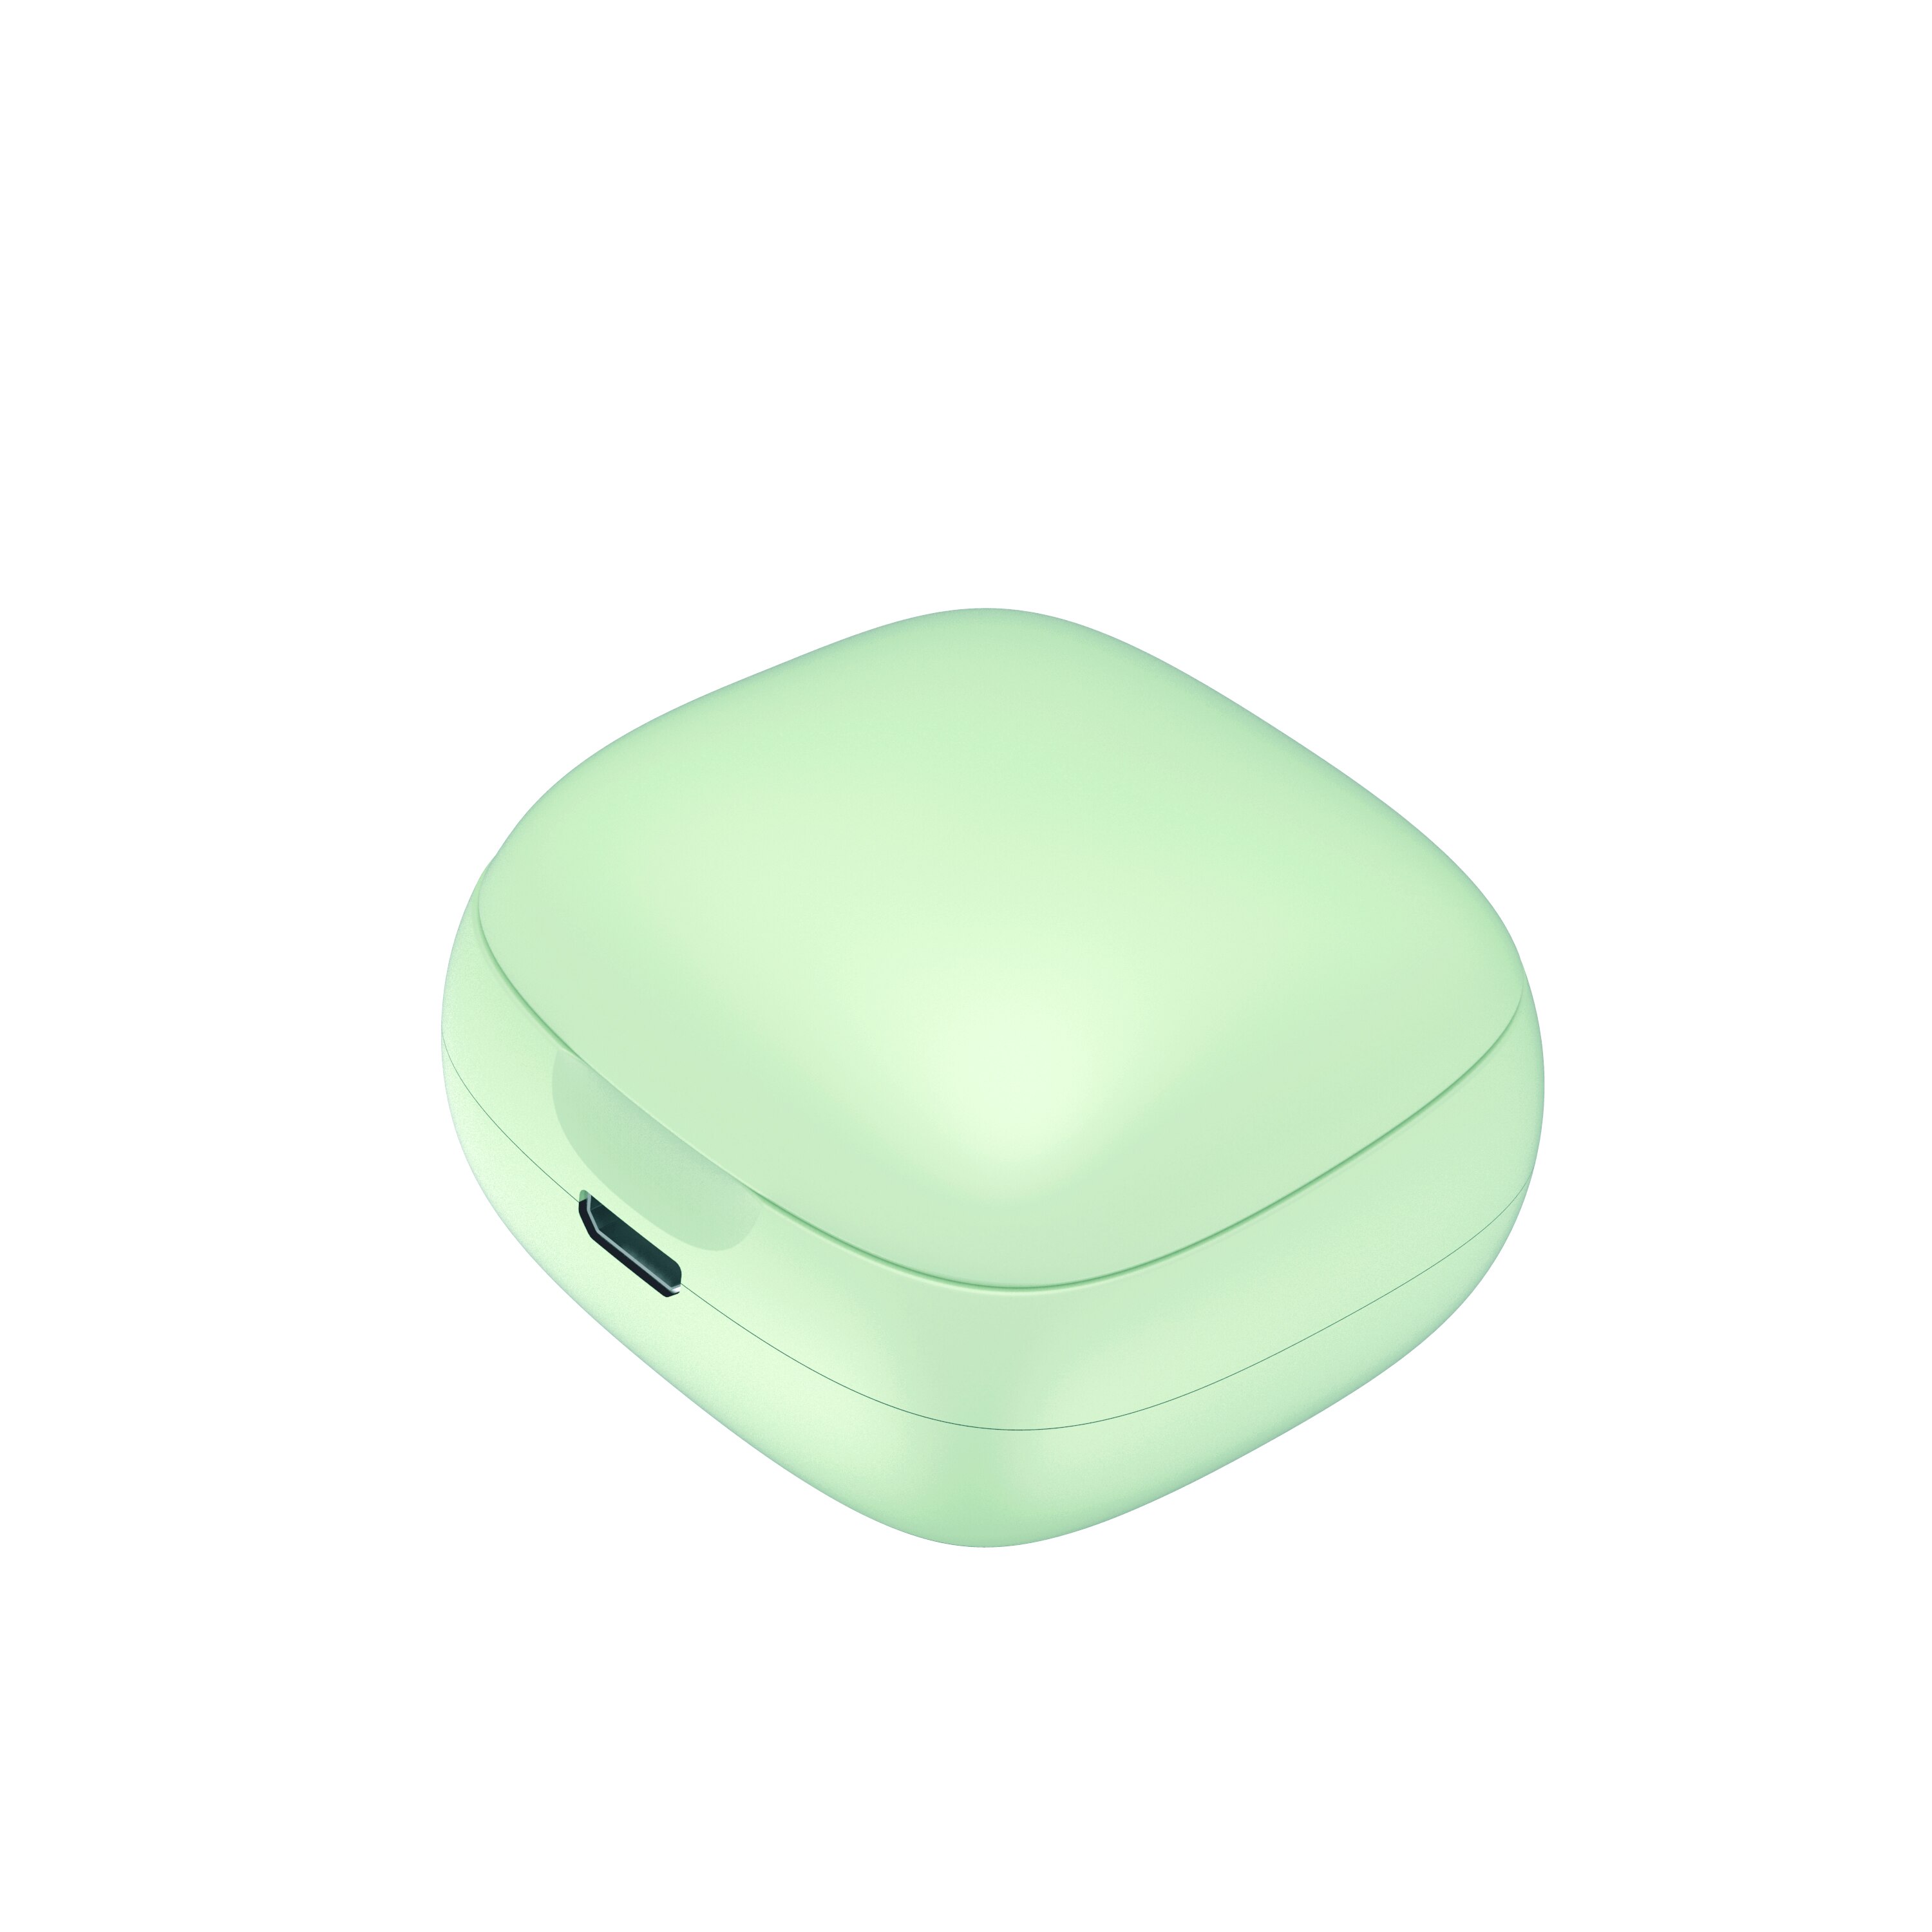 Bluetooth  v5.0 tws ægte trådløse stereo øretelefoner xg -12 støjreduktion øretelefon: Grøn